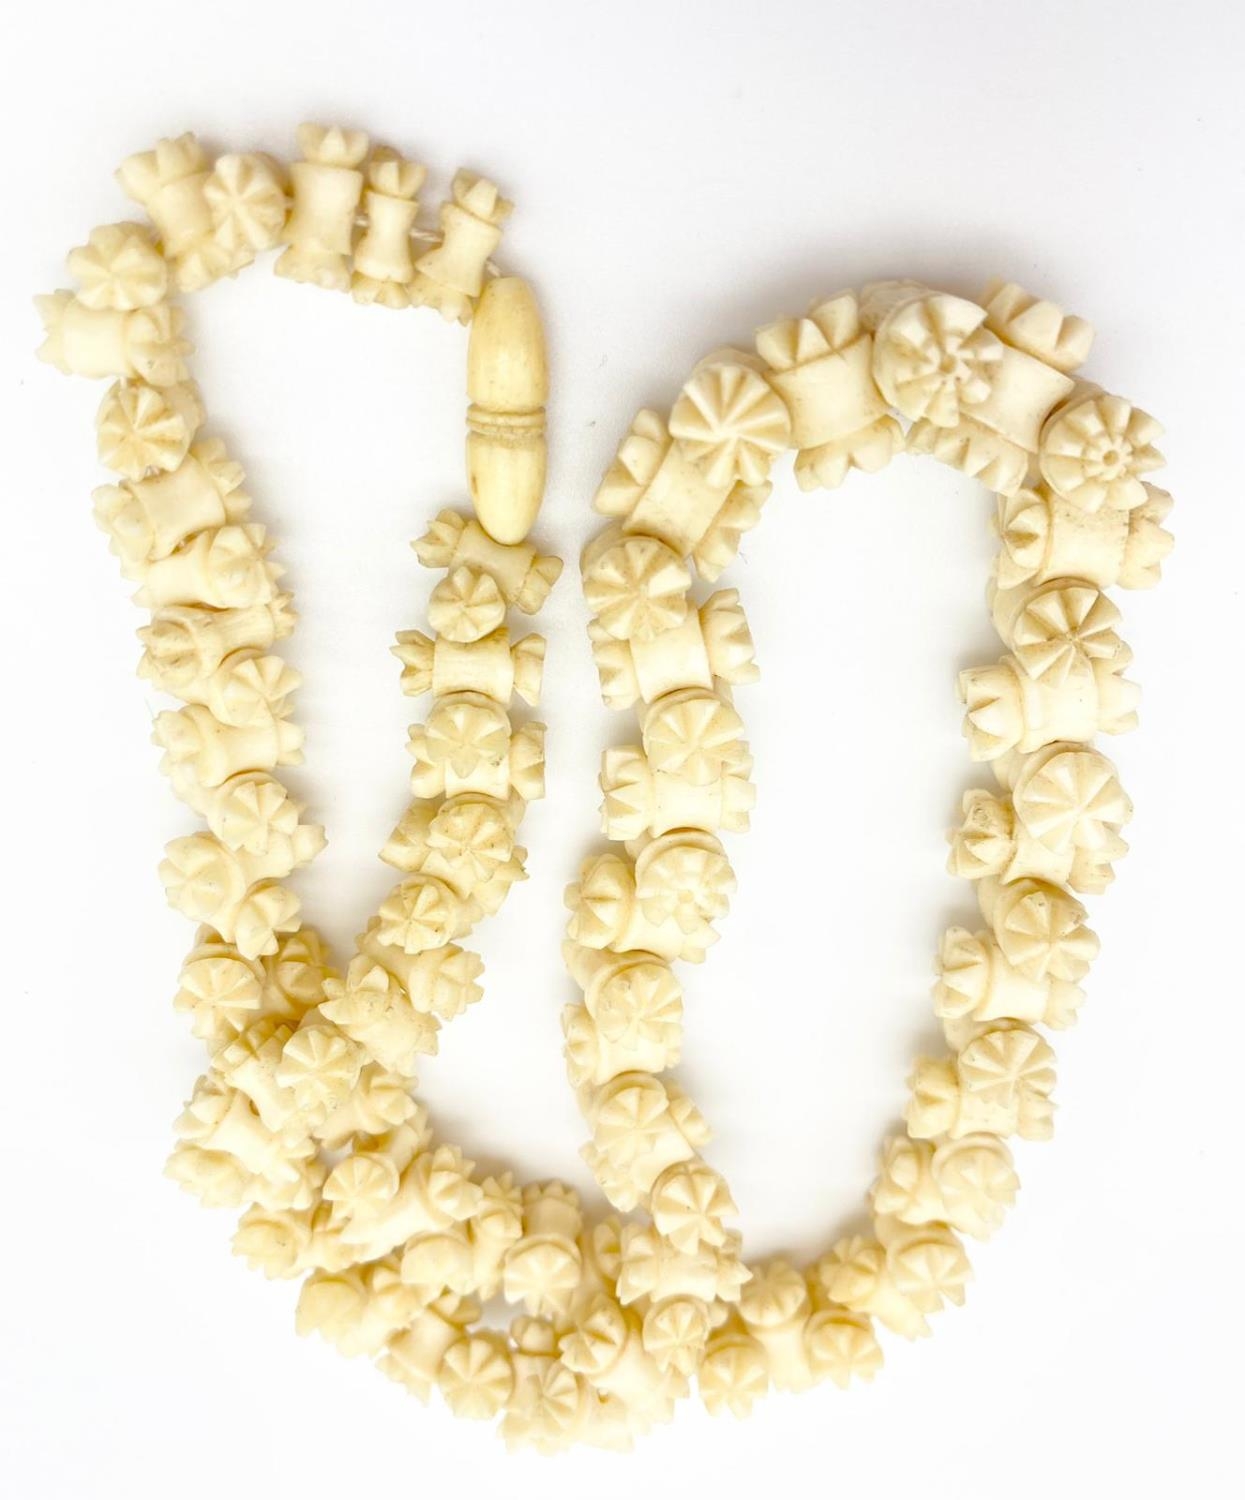 Antique Ivory Hand-Carved Floral Necklace. 44cm - Image 3 of 3